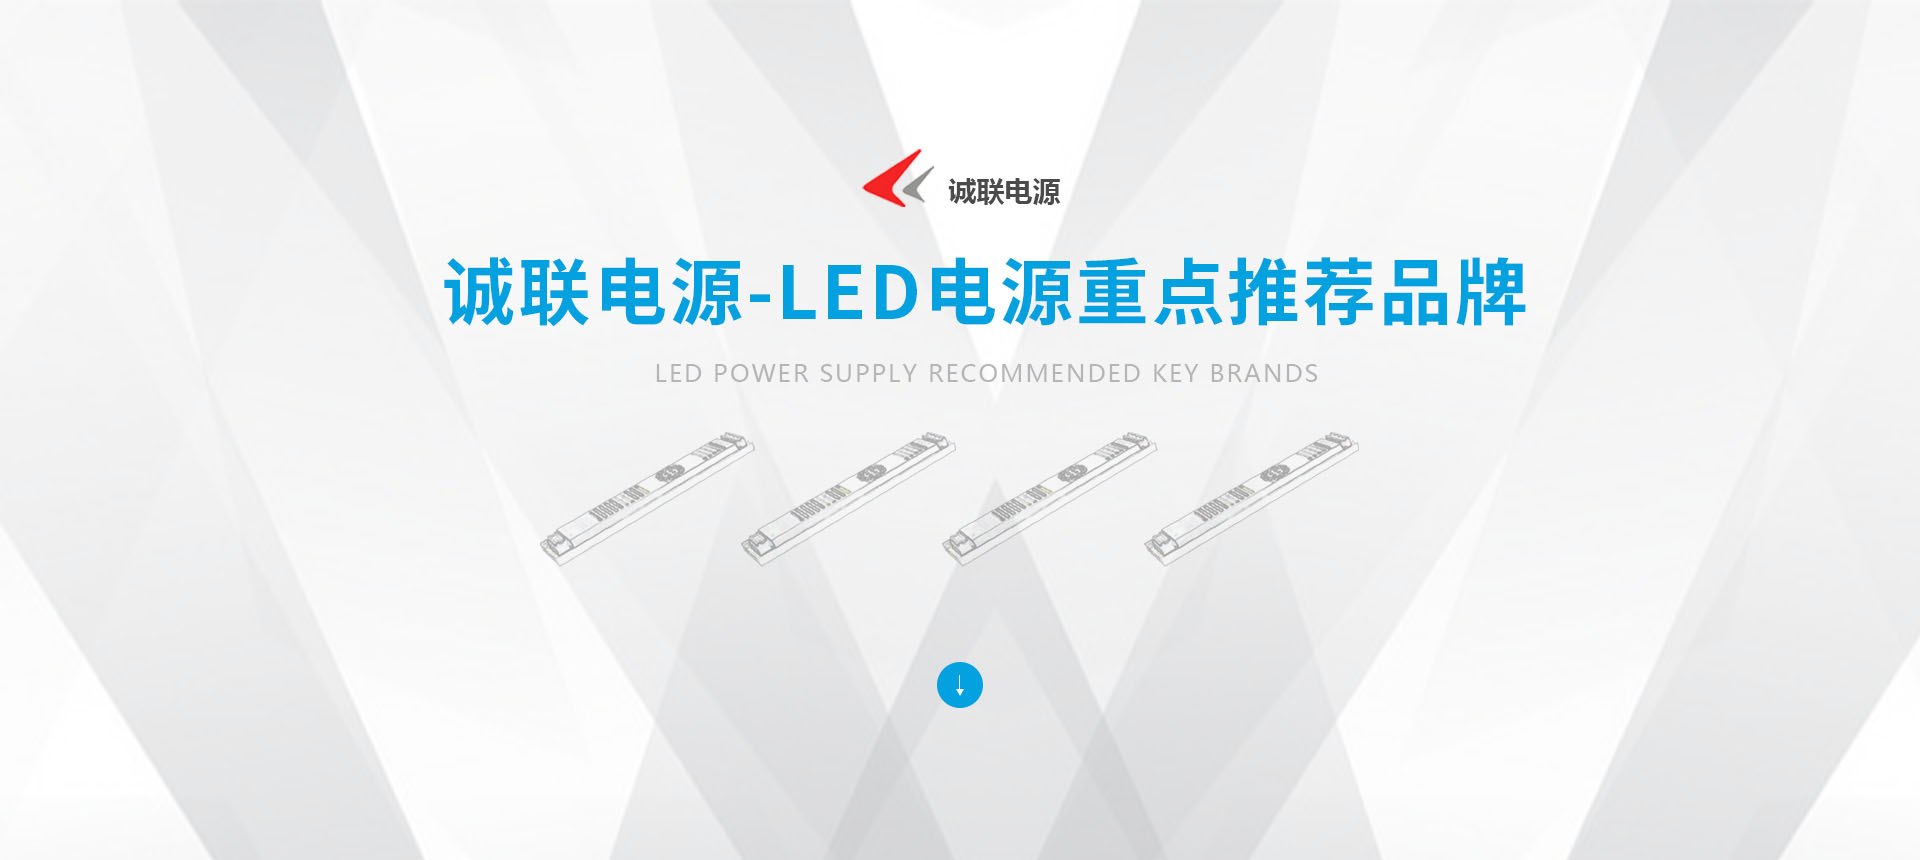 888.3net新浦京游戏-LED电源重点推荐品牌